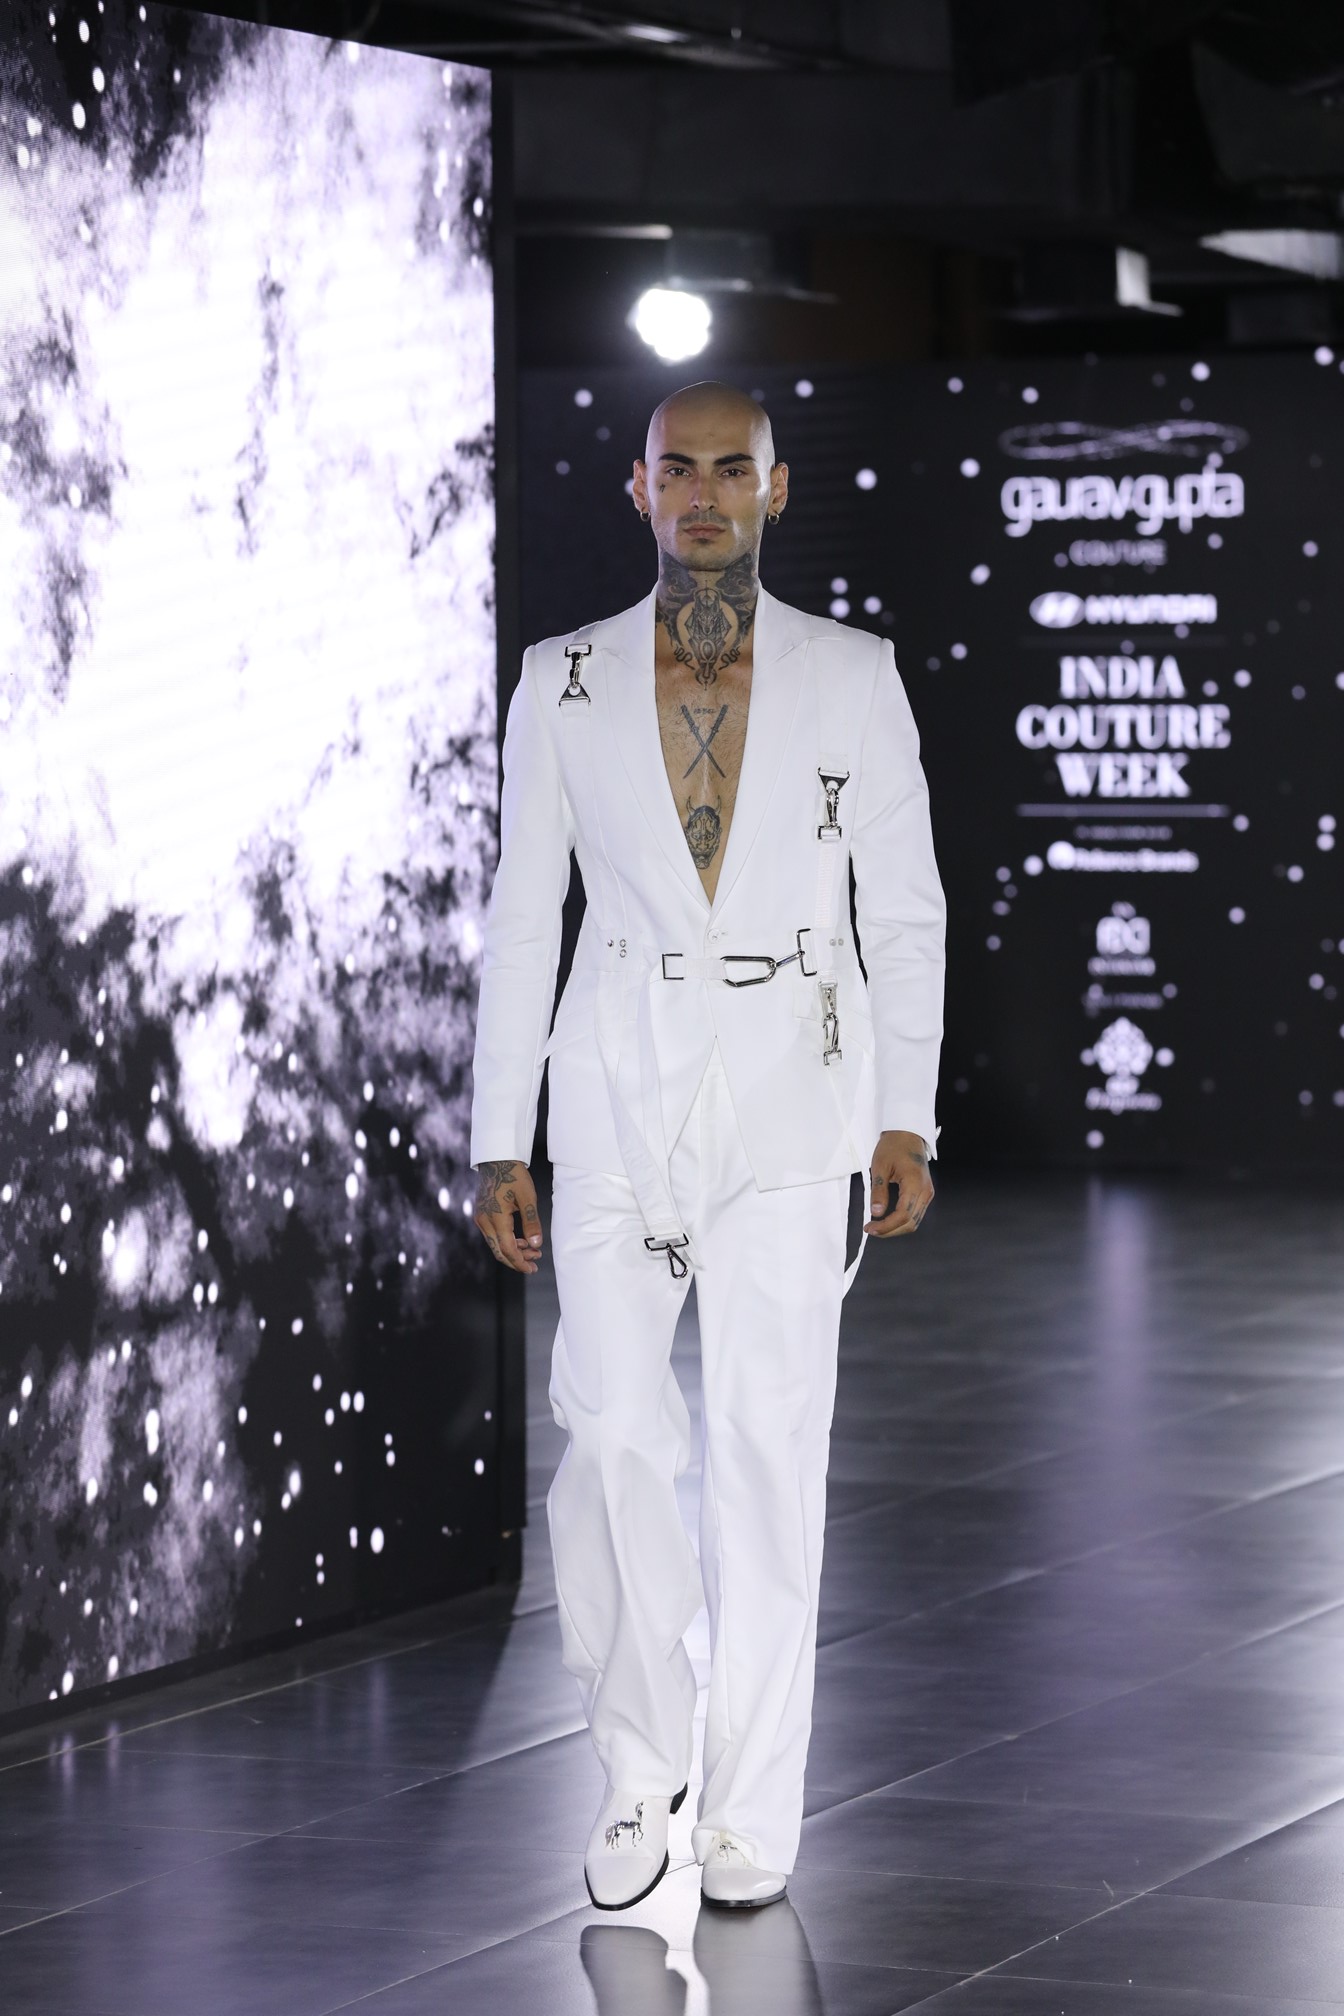 Gaurav Gupta collection at FDCI Hyundai India Couture Week 